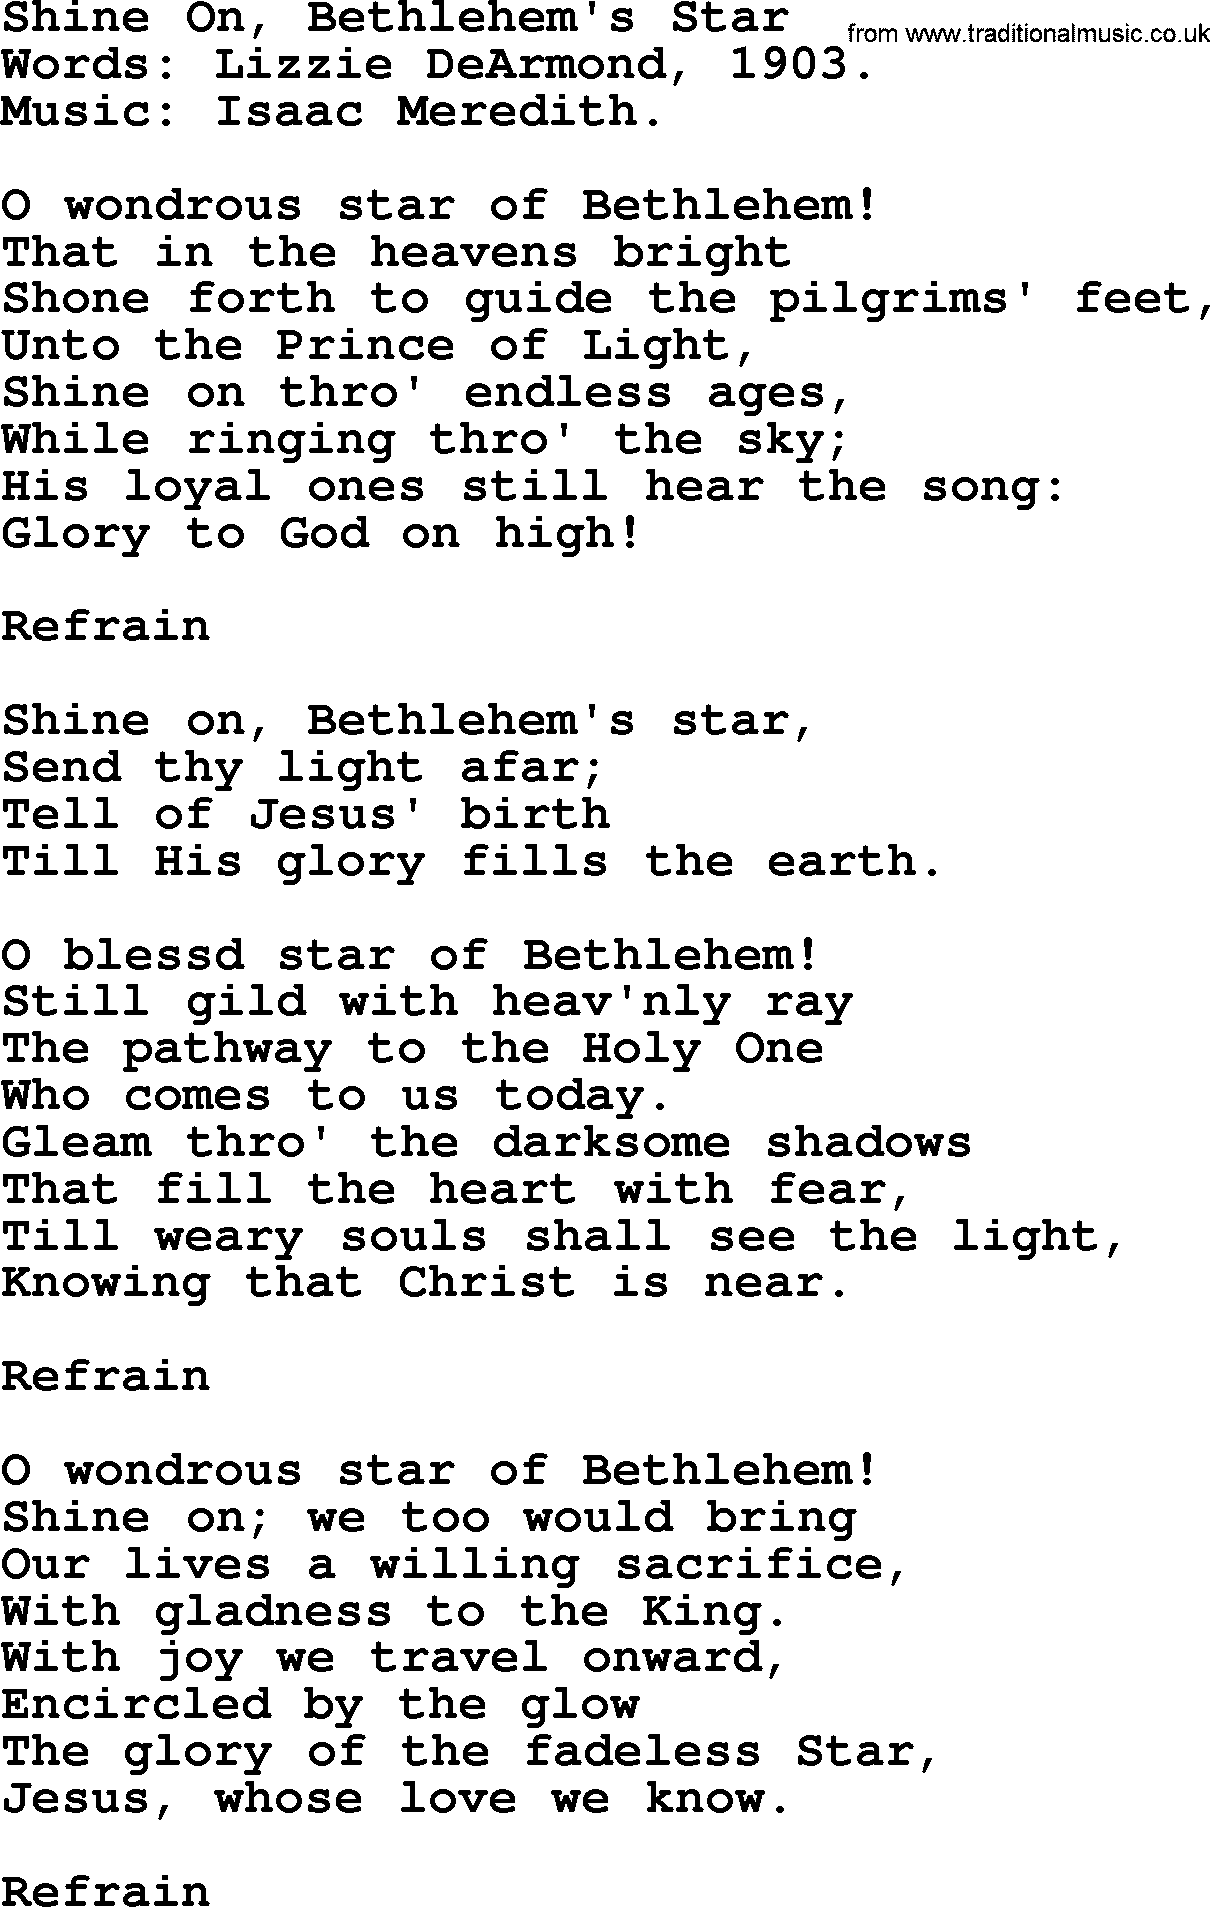 Christmas Hymns, Carols and Songs, title: Shine On, Bethlehem's Star, lyrics with PDF